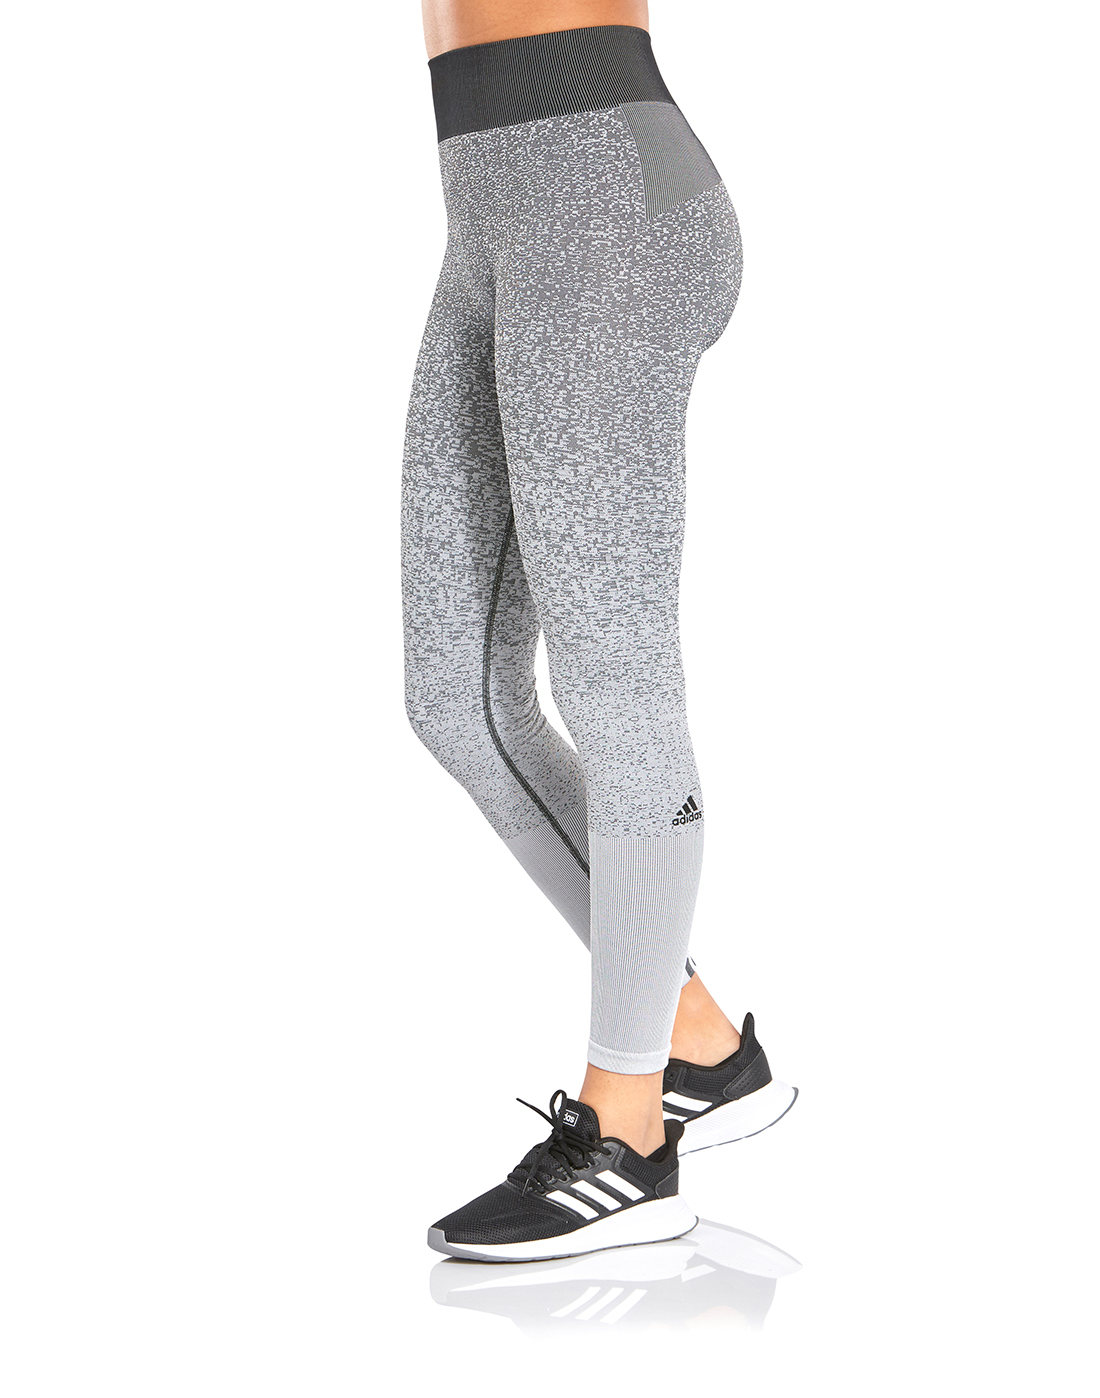 adidas training primeknit leggings in grey